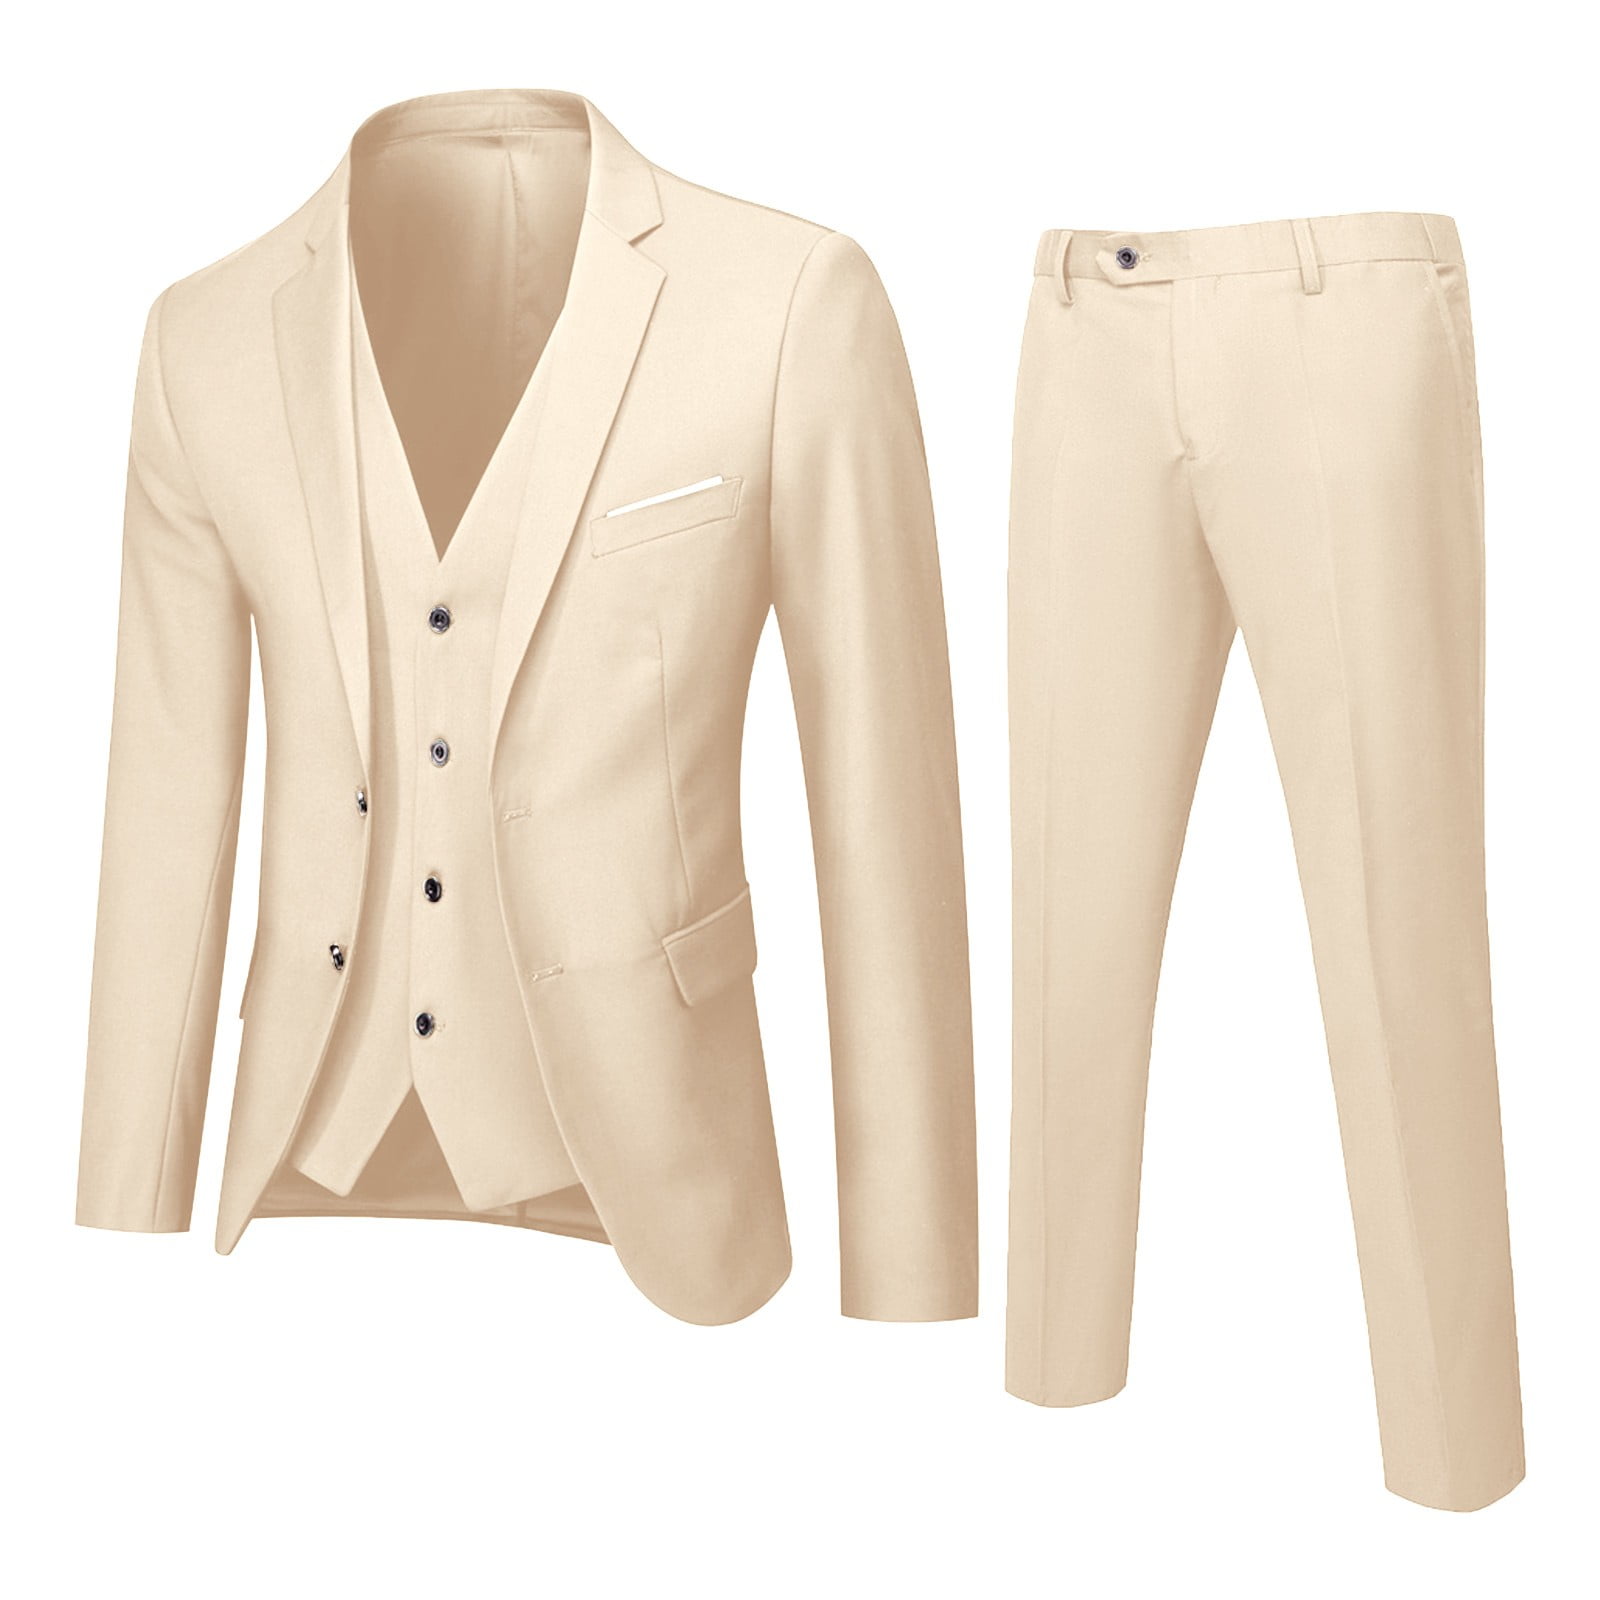 wofedyo blazer for men menâ s suit slim 3 piece suit business wedding ...